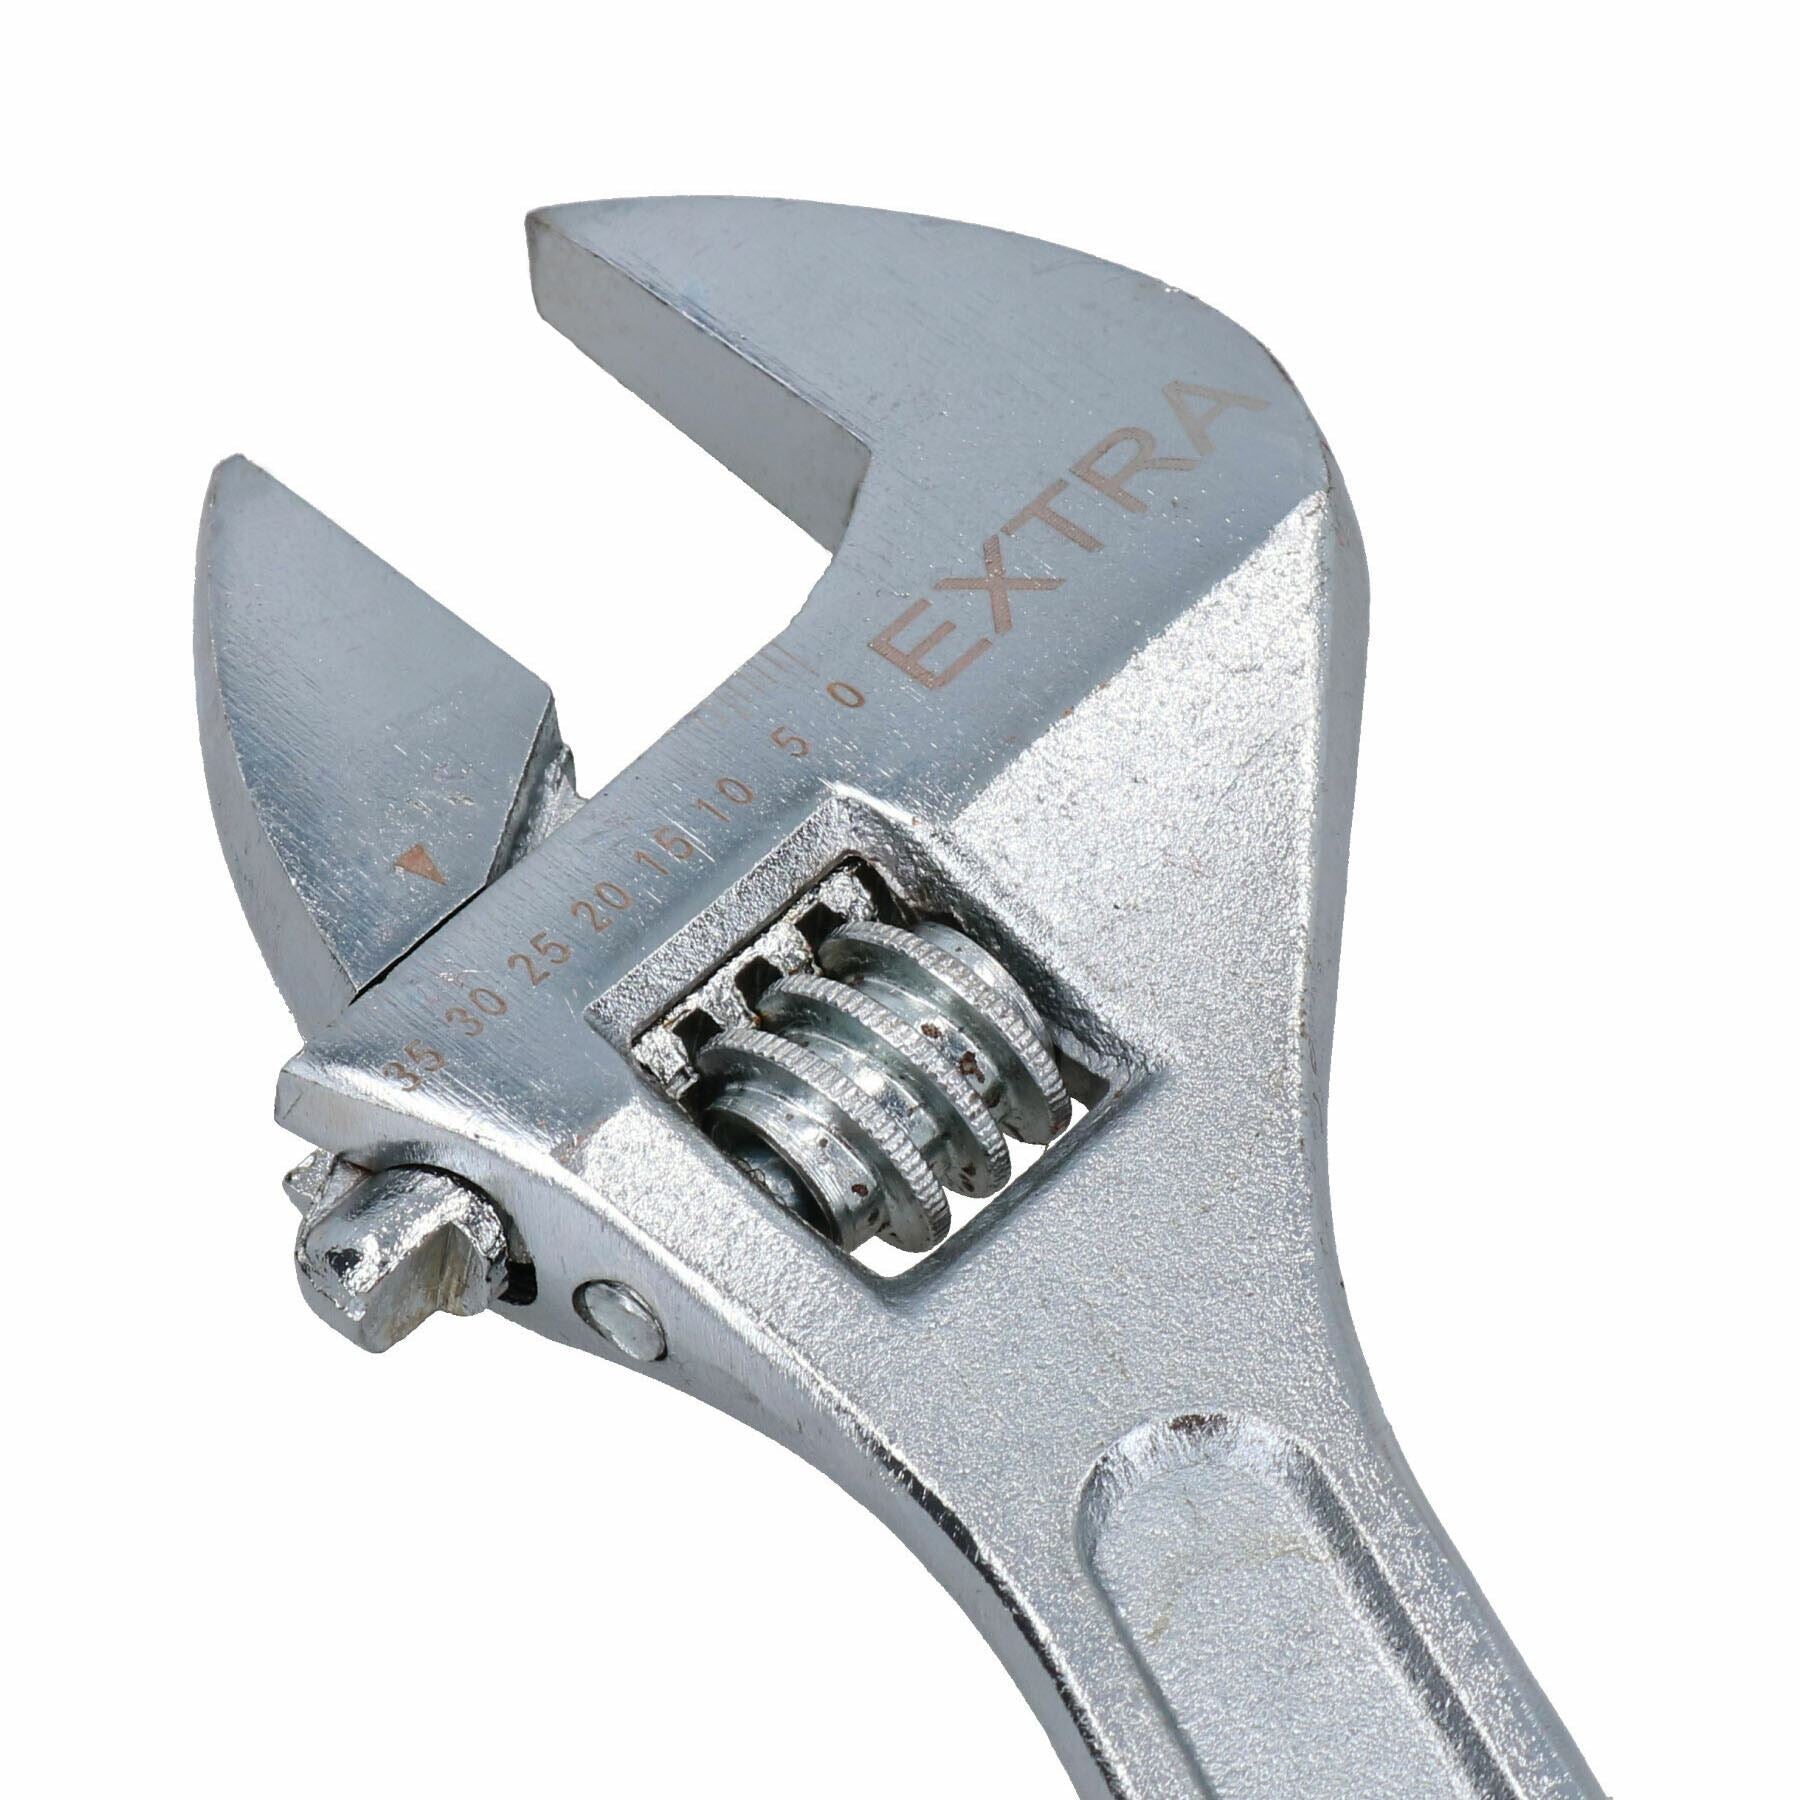 12" / 300mm Standard Adjustable Spanner Monkey Wrench Plumbers 0 - 33mm